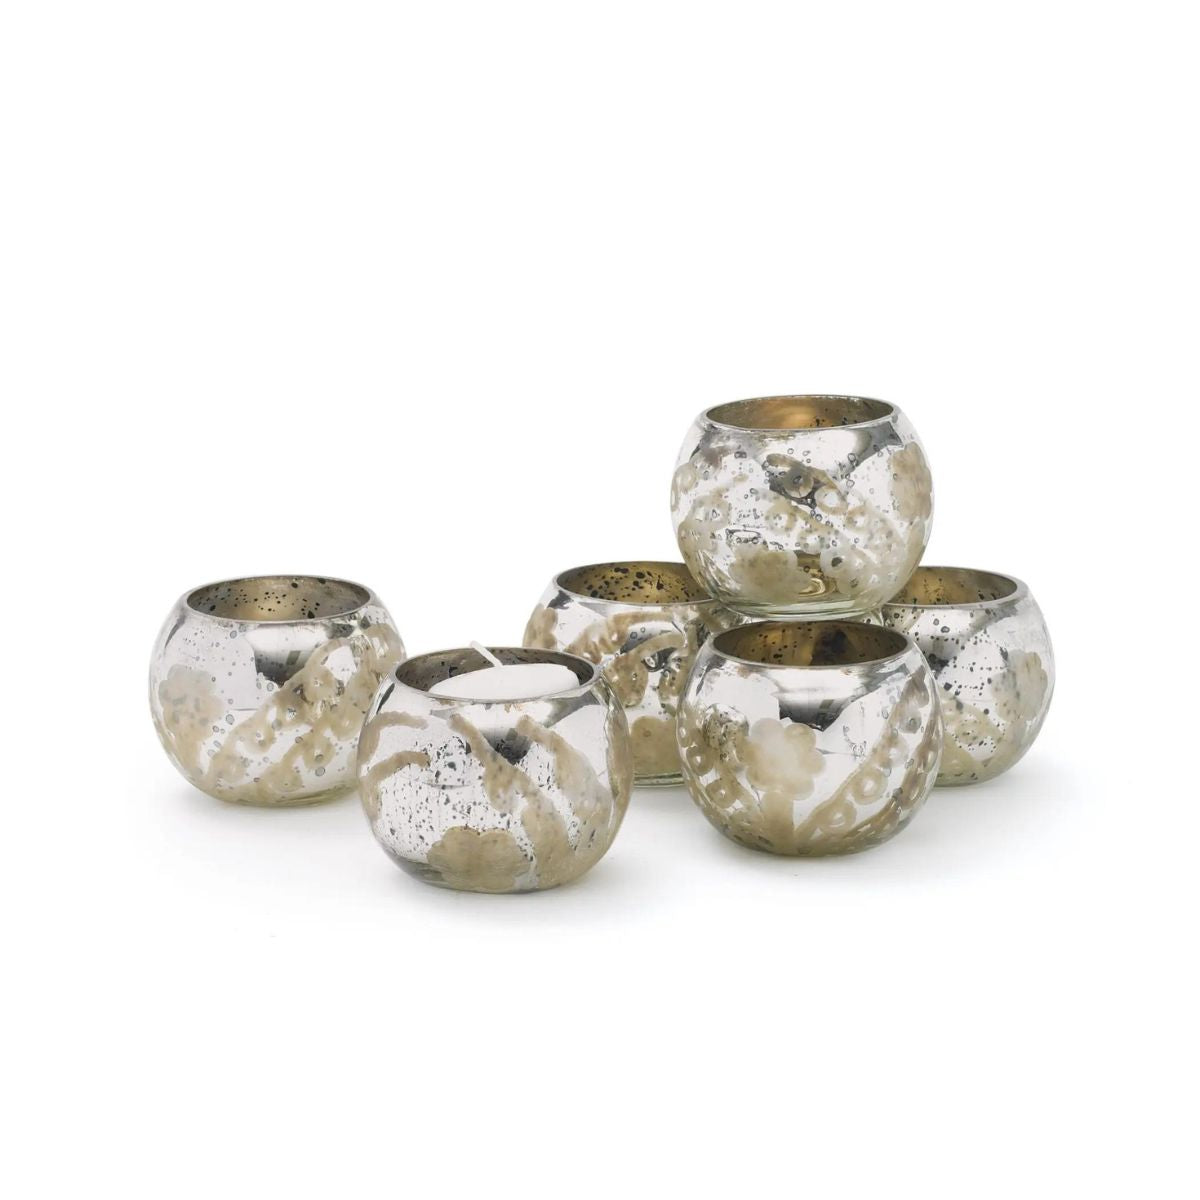 Antique Silver Mercury Glass Votive Holders, Set of 6